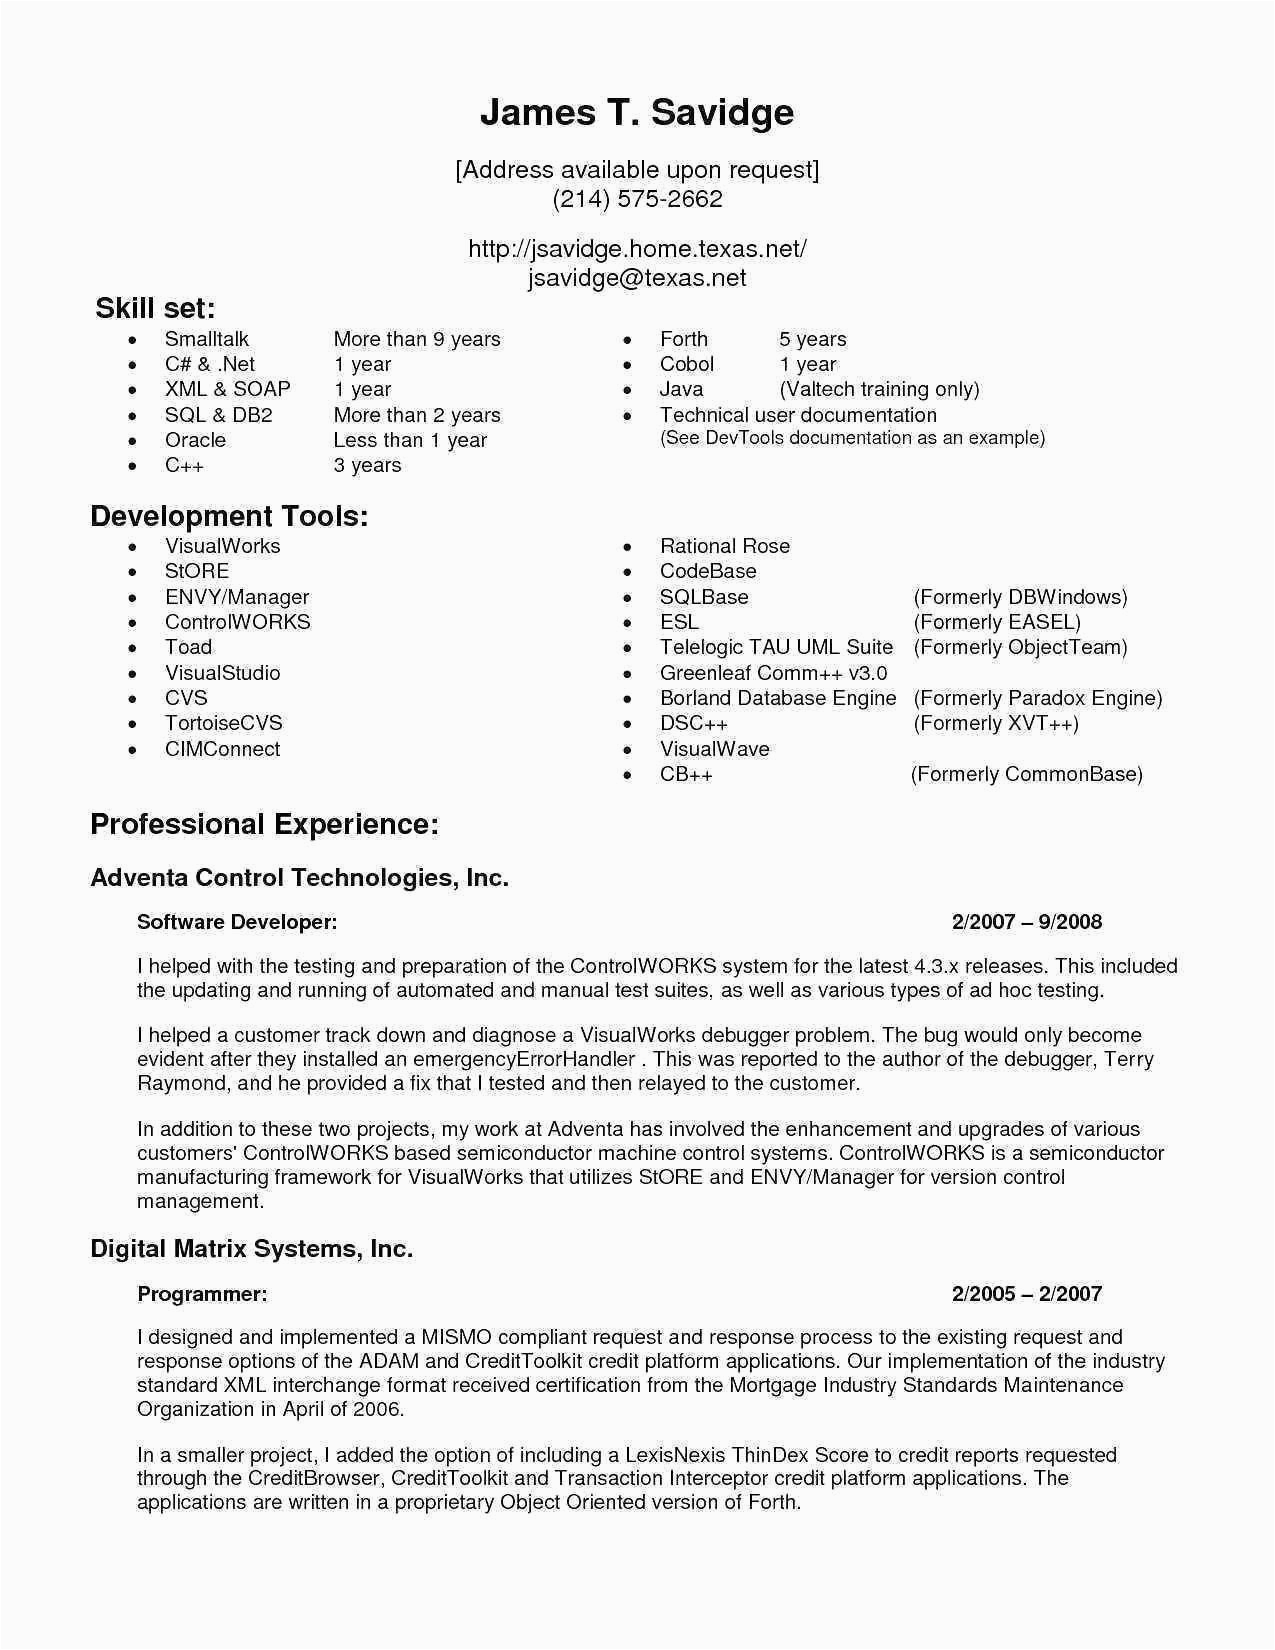 Resume Samples 3 5 Years Experience Java Resume Sample 3 Years Experience Best Resume Examples